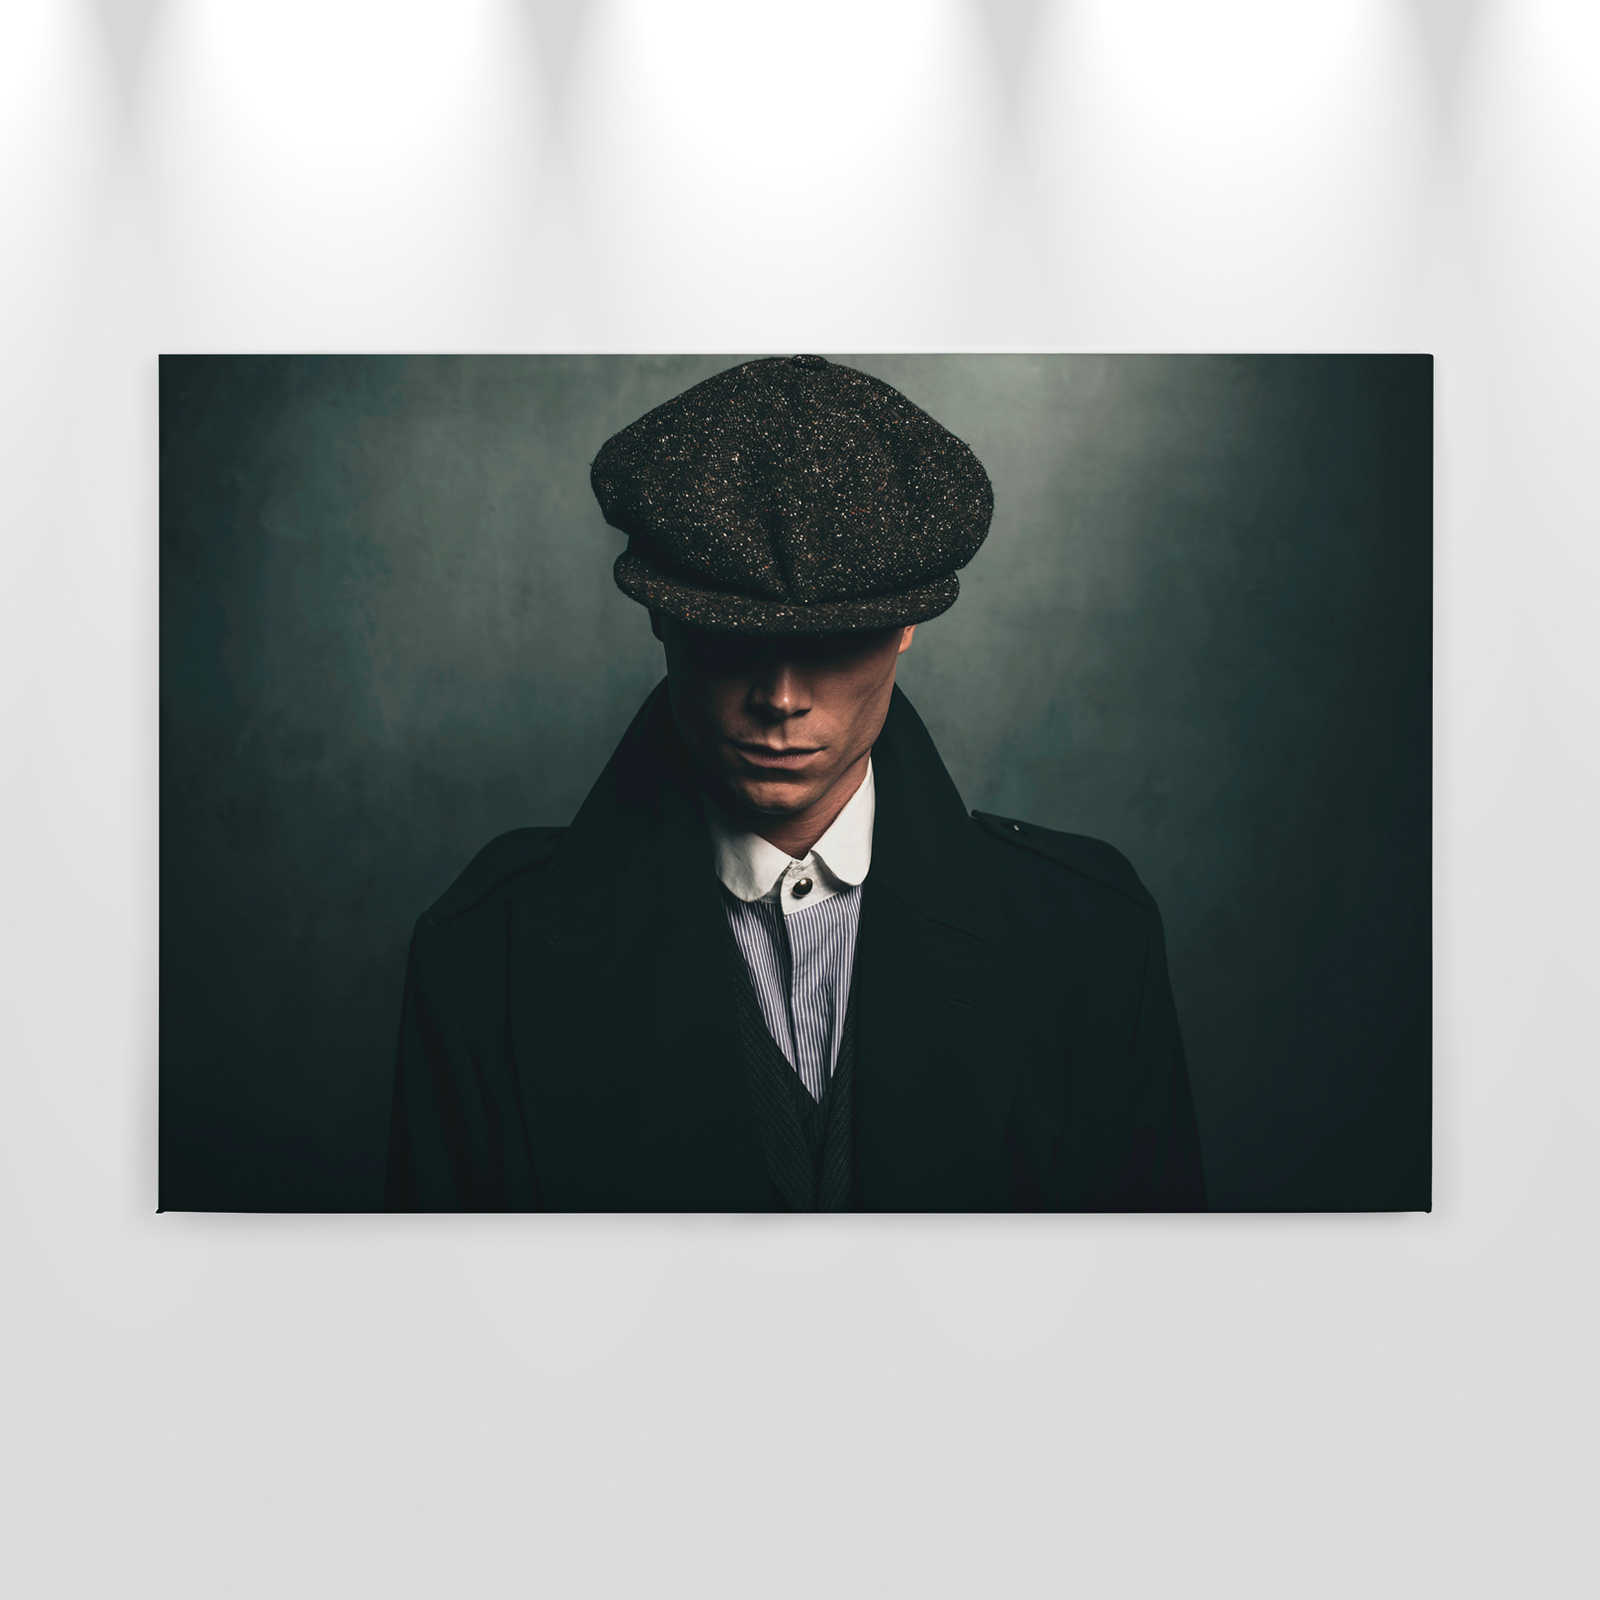             Roger 1 - Leinwandbild Gangster Portrait, Retro Style – 0,90 m x 0,60 m
        